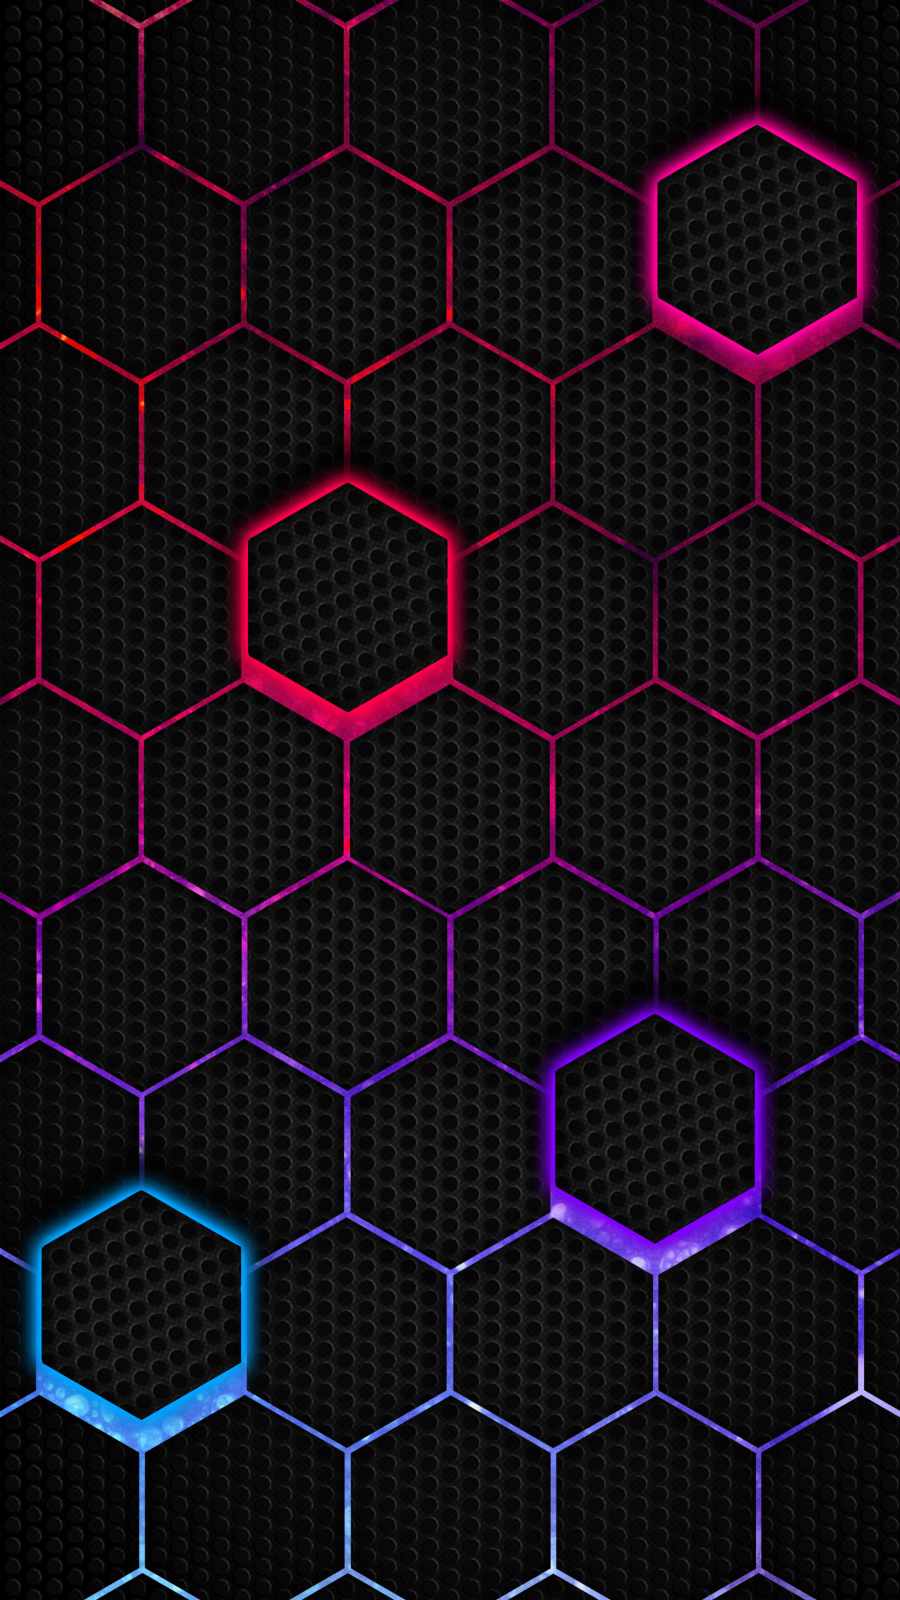 Hexagon Background - IPhone Wallpapers : iPhone Wallpapers